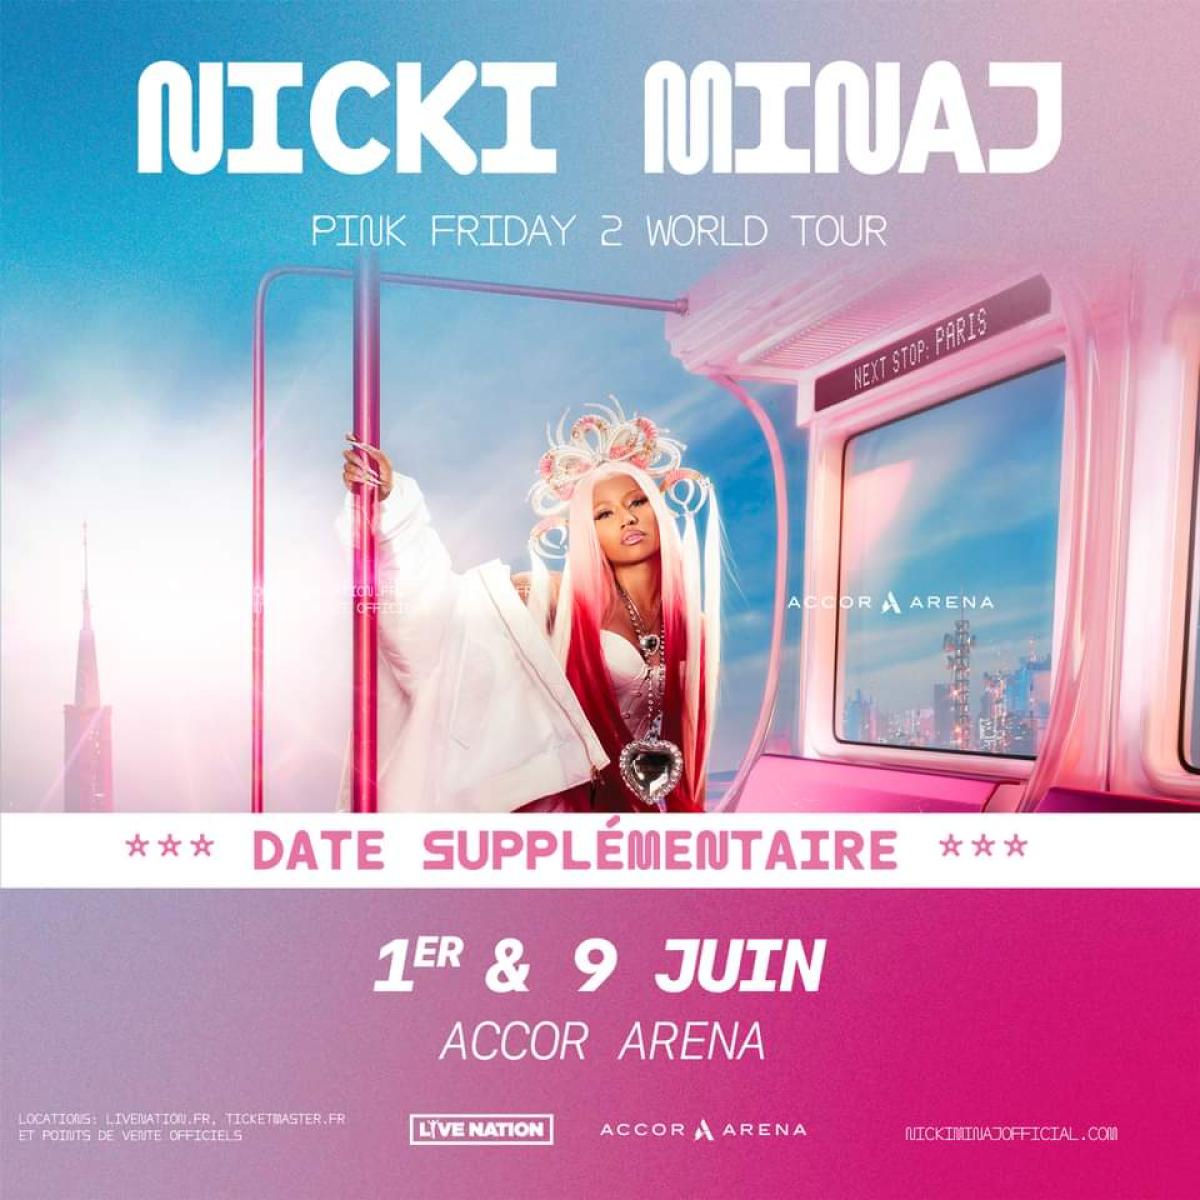 Nicki Minaj al Accor Arena Tickets